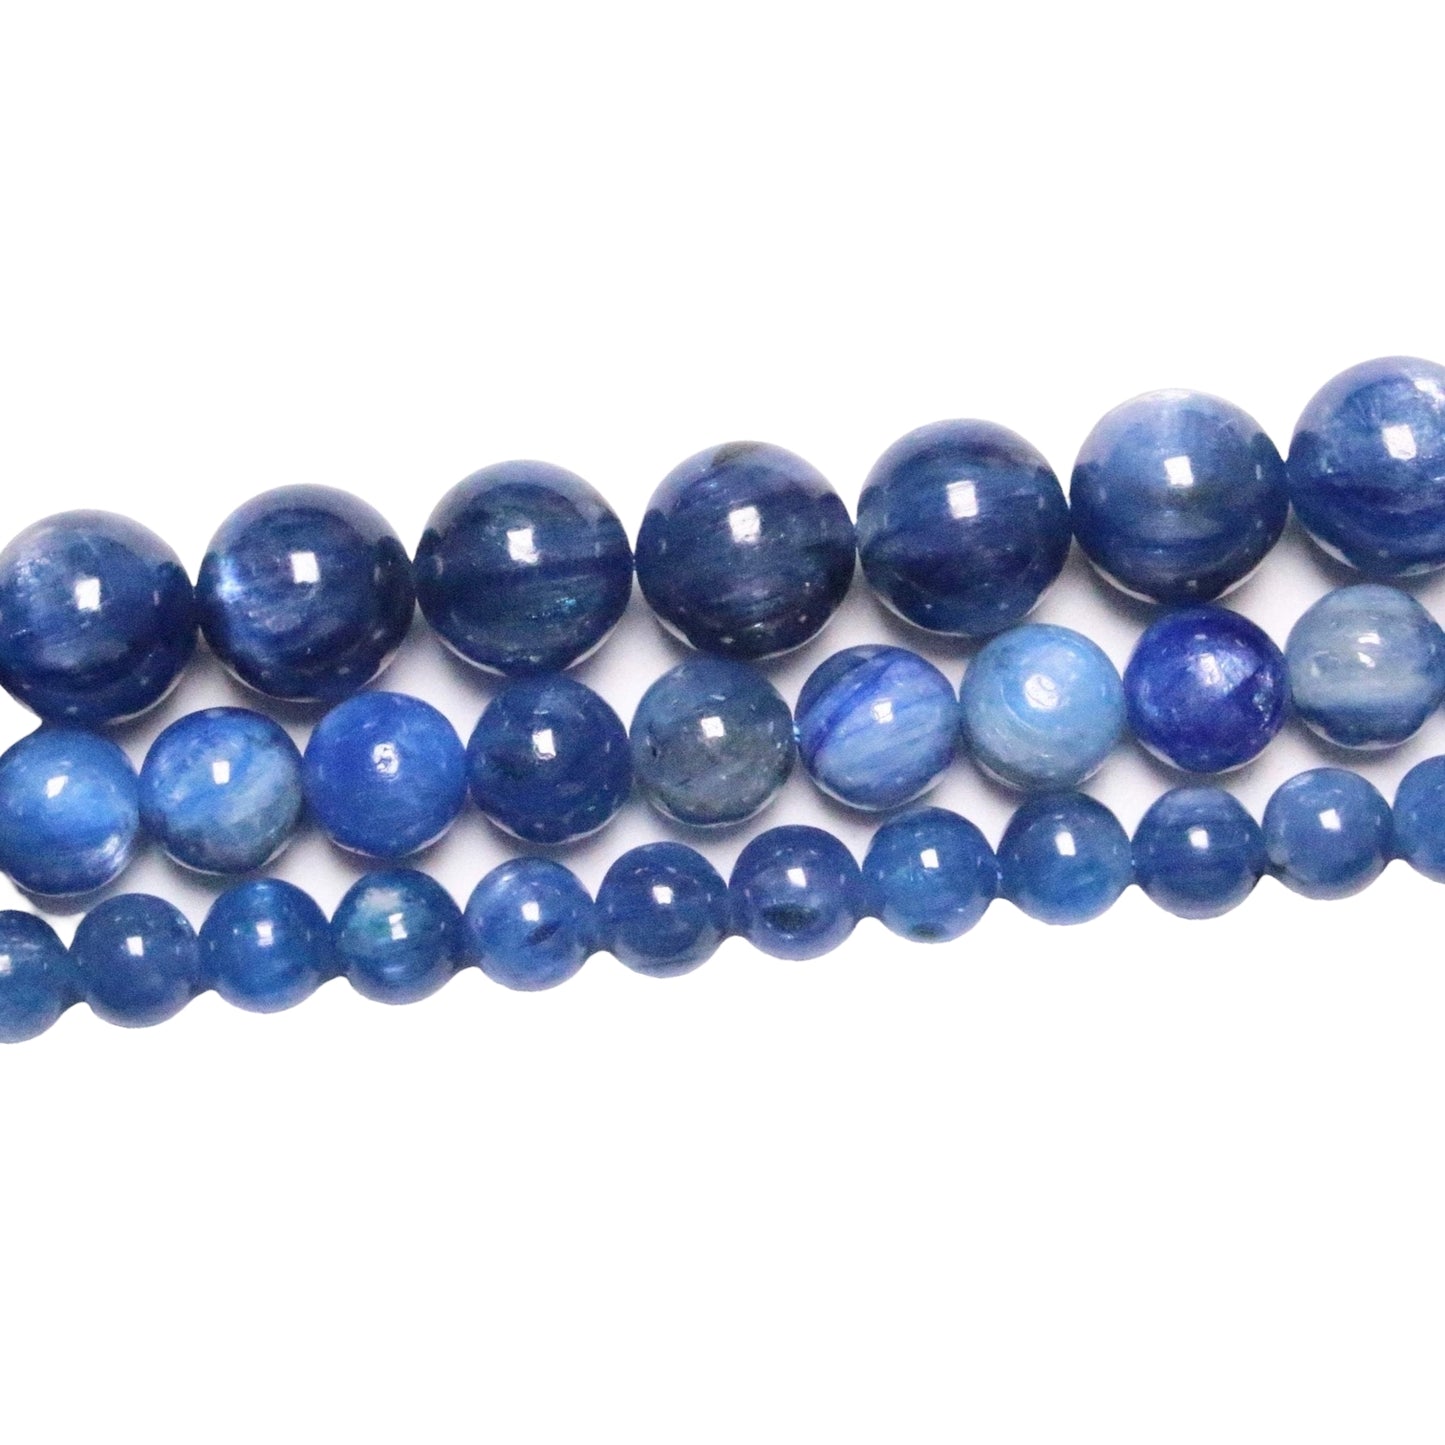 Blue cyanite pearl wire has